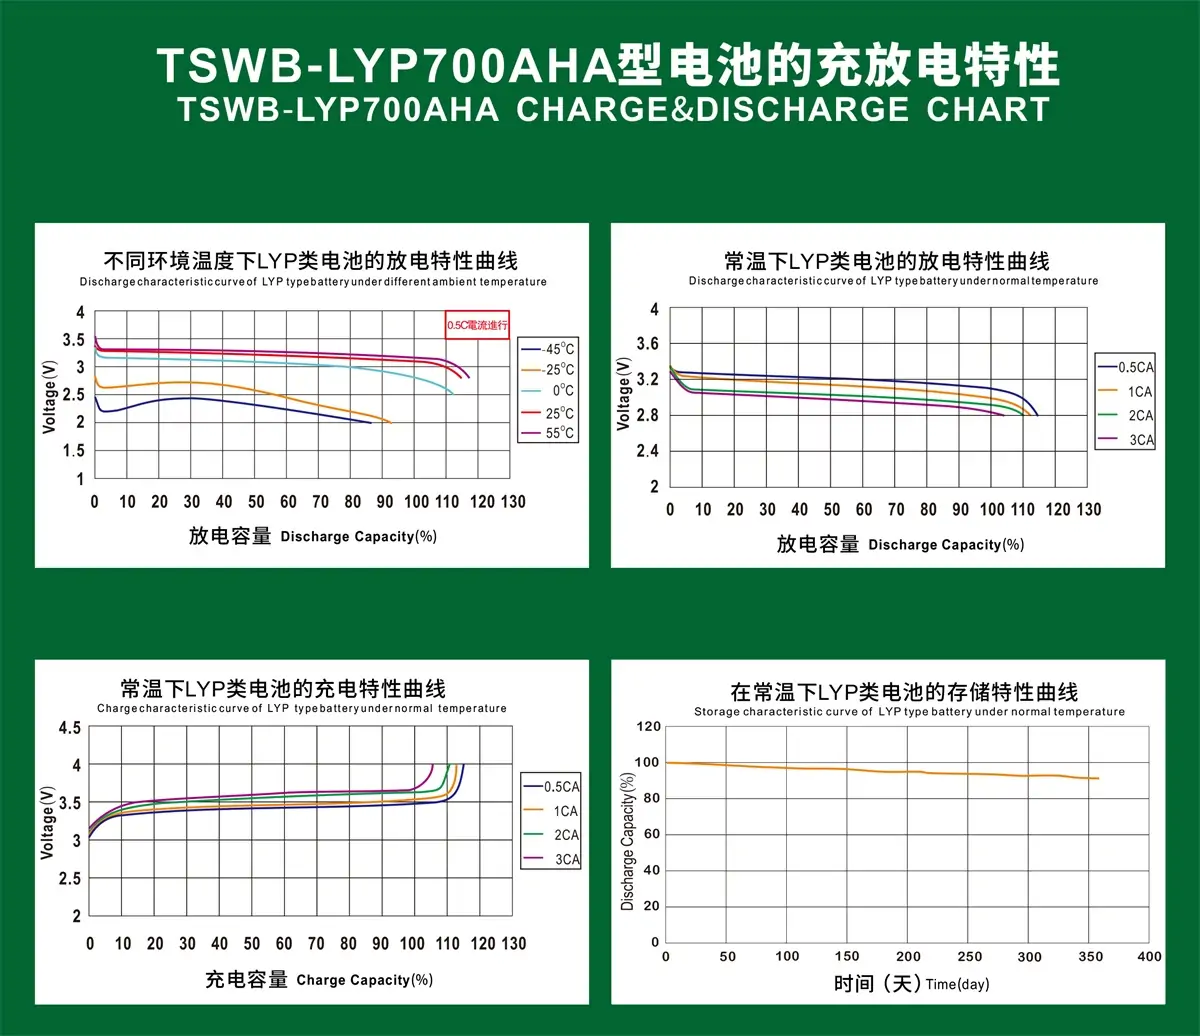 TSWB-LYP700AHA CHARGE&DISCHARGE CHART